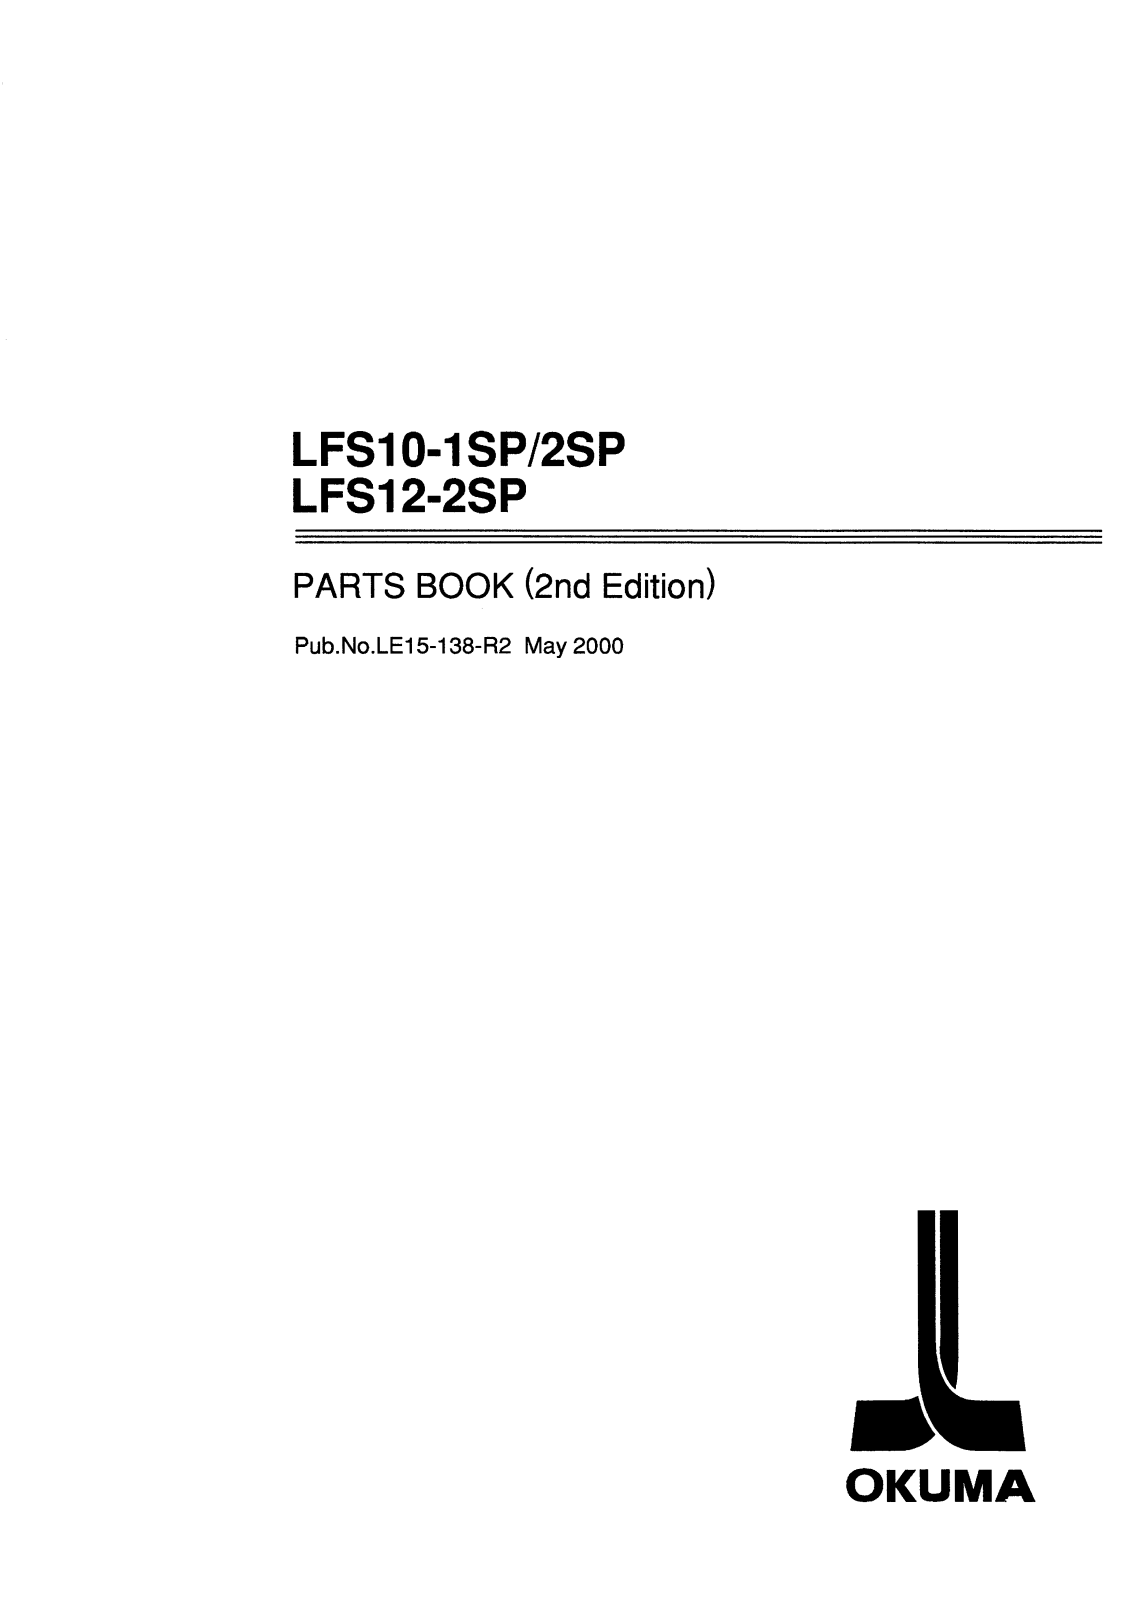 okuma LFS10-1SP, LFS12-2SP User Manual